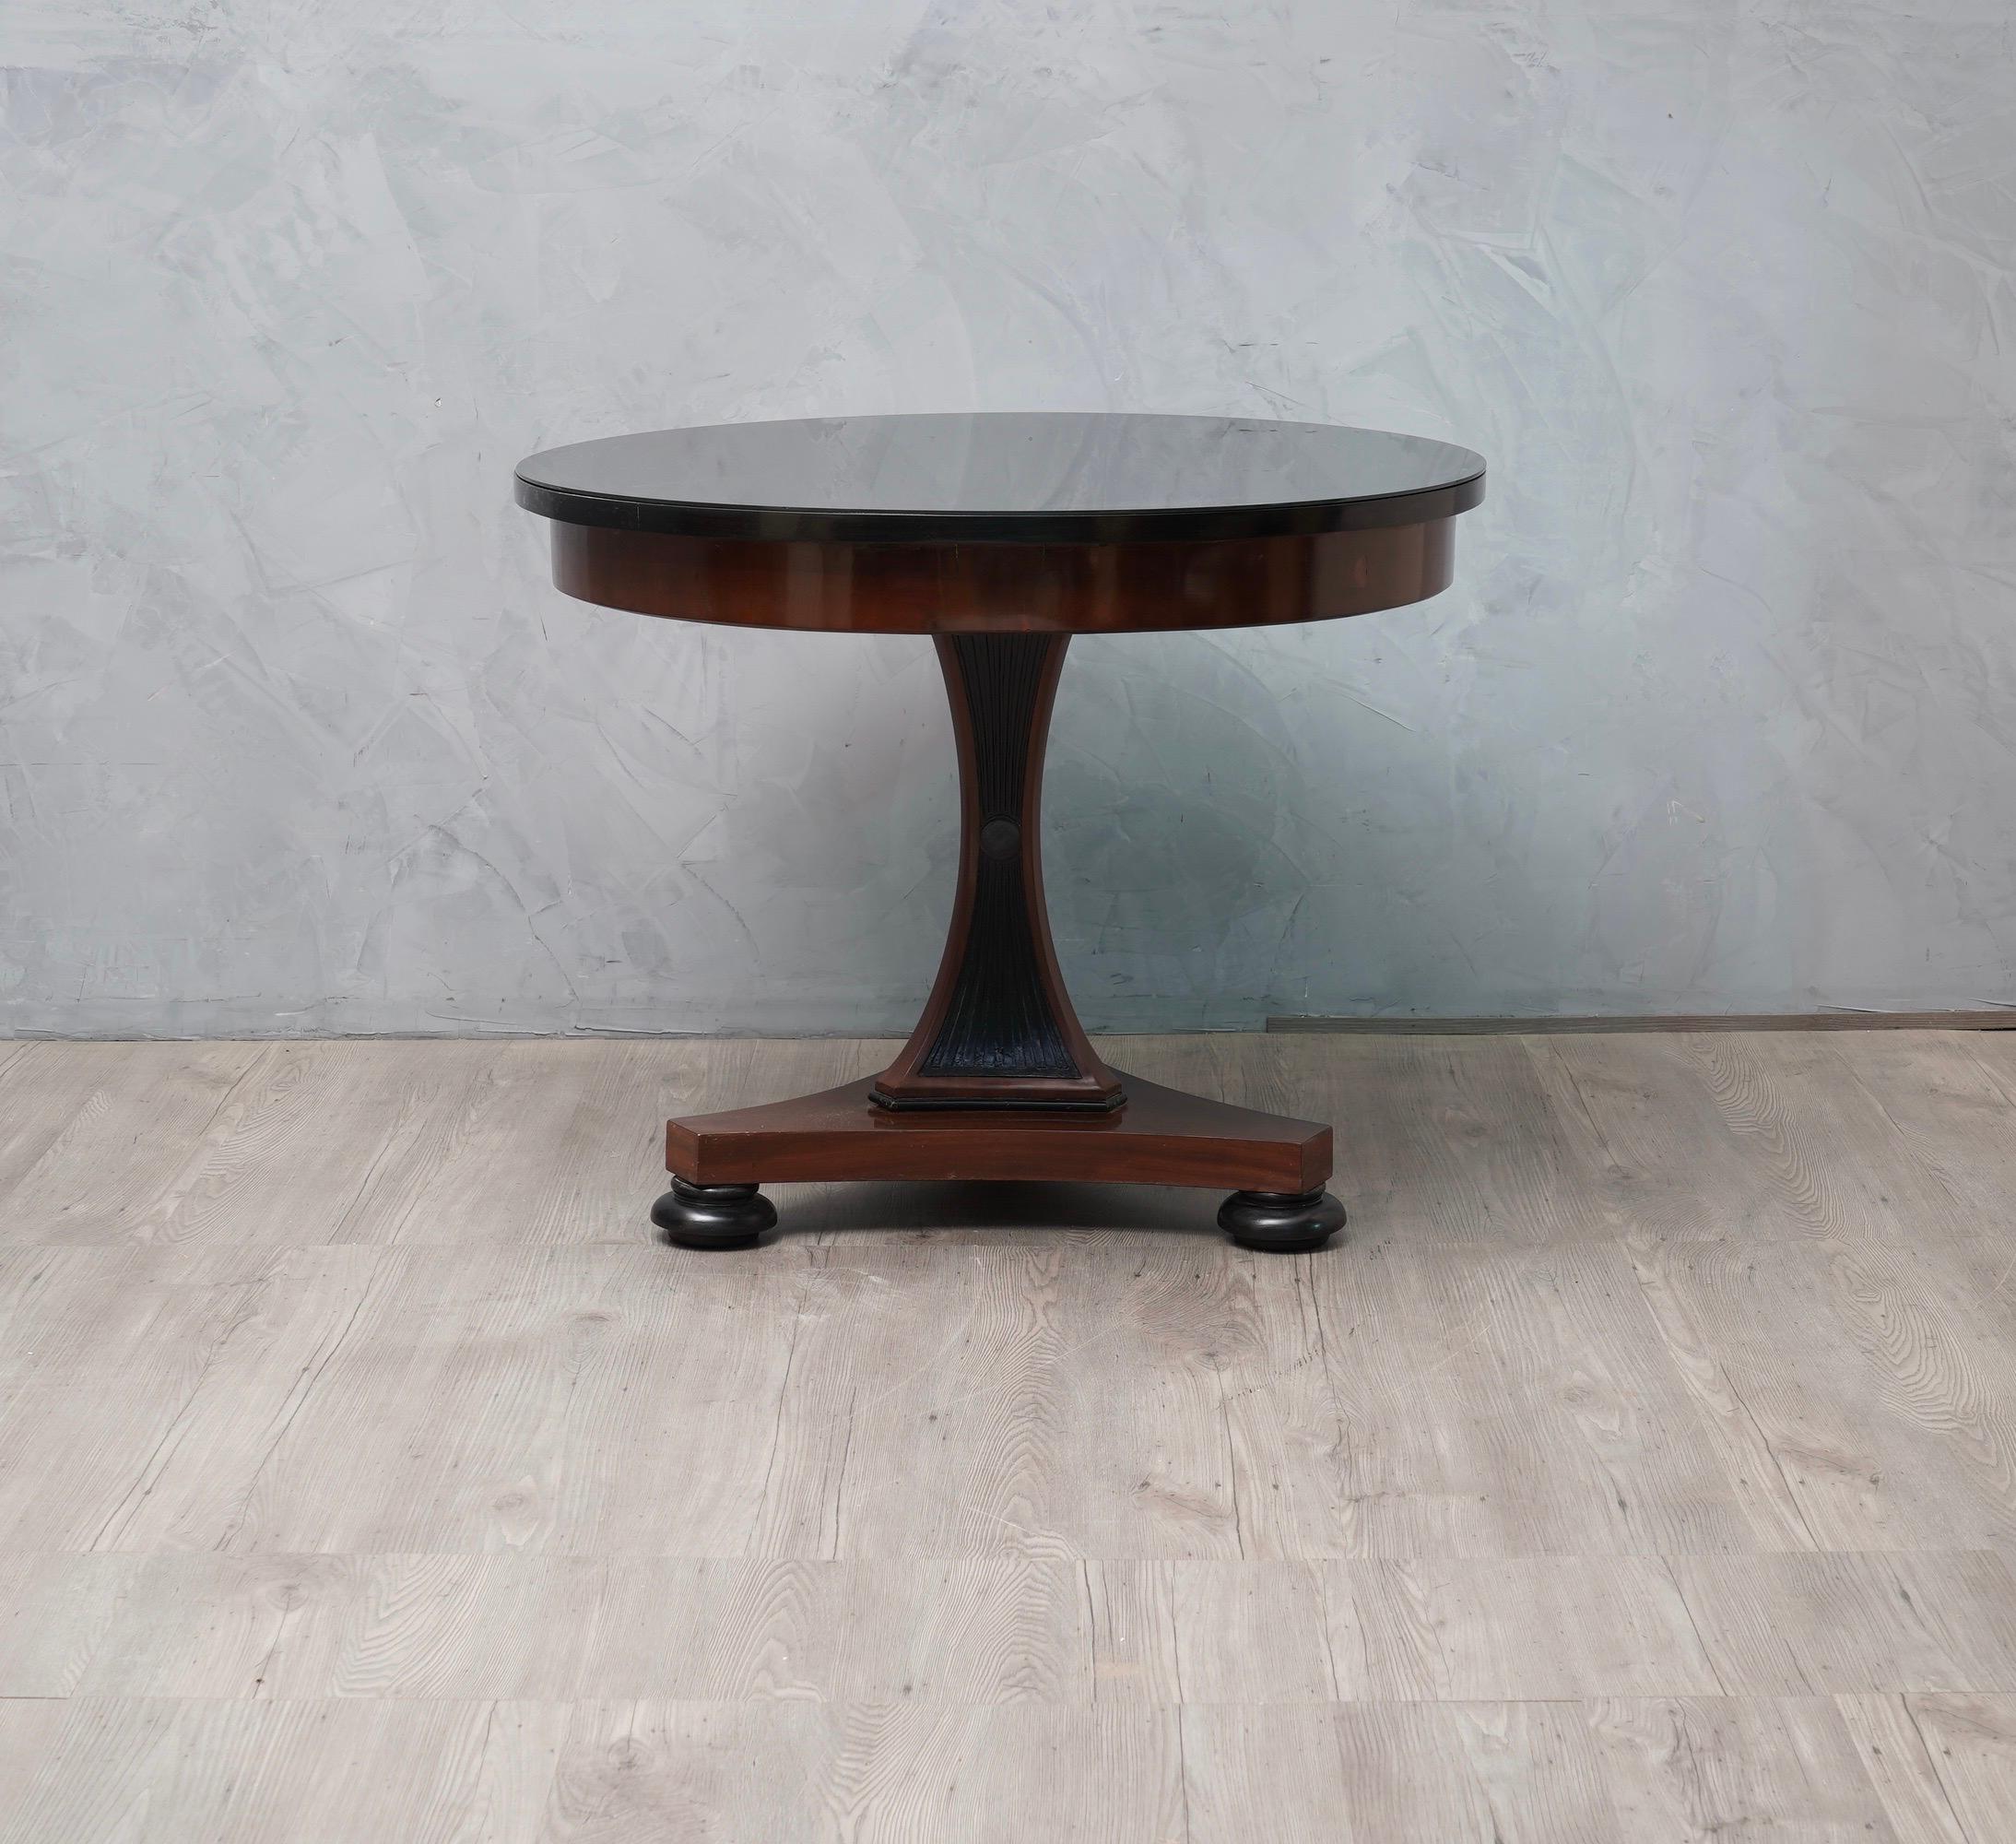 Super elegant Biedermeier center table, surprising its beautiful mahogany 